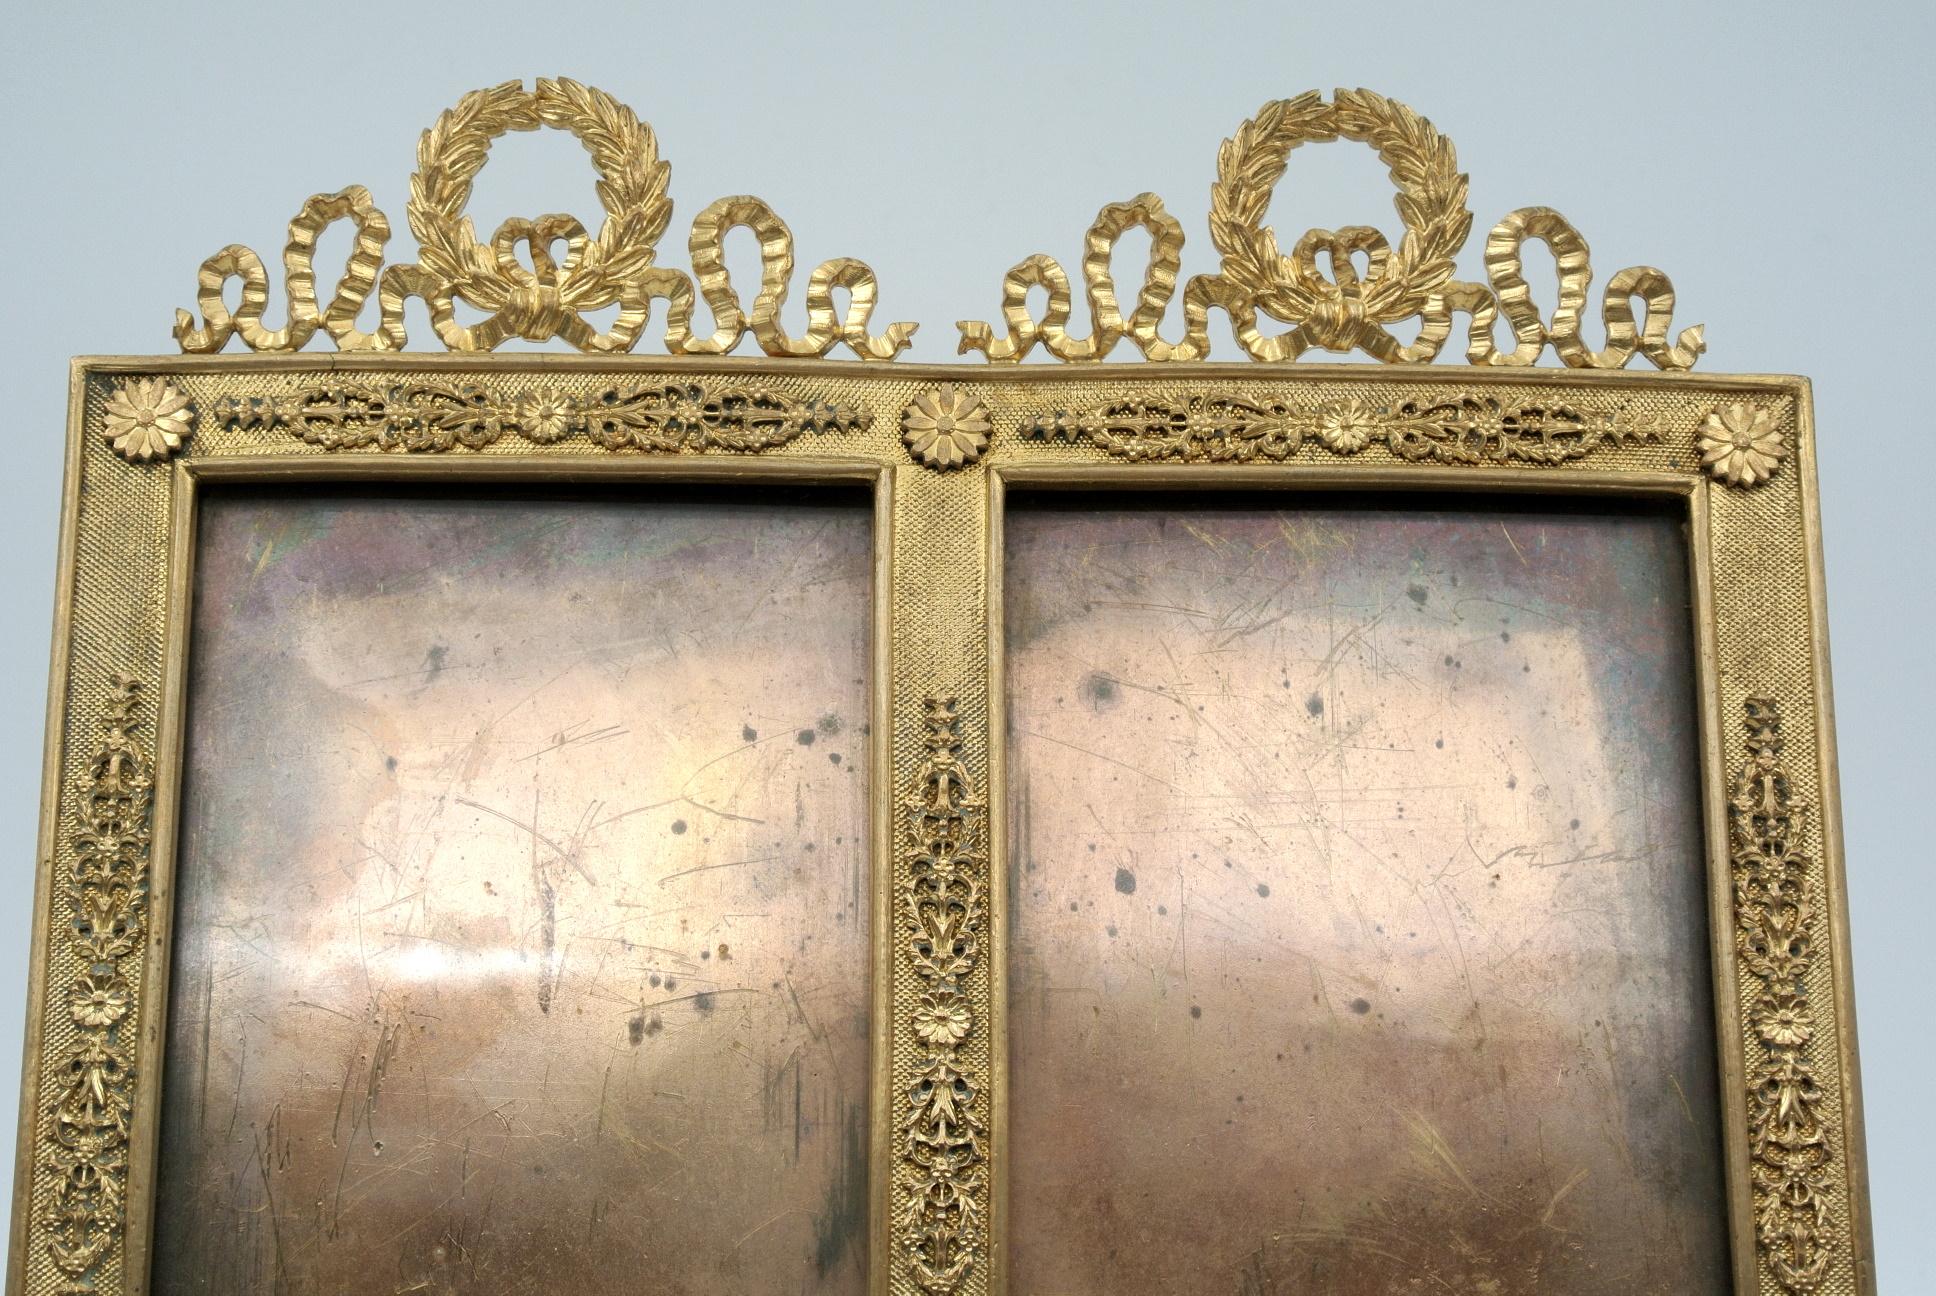 Gilded bronze frame and painted porcelain plaque, 19th century, Napoleon III period.
Measures: H 27 cm, W 22 cm, D 2 cm.